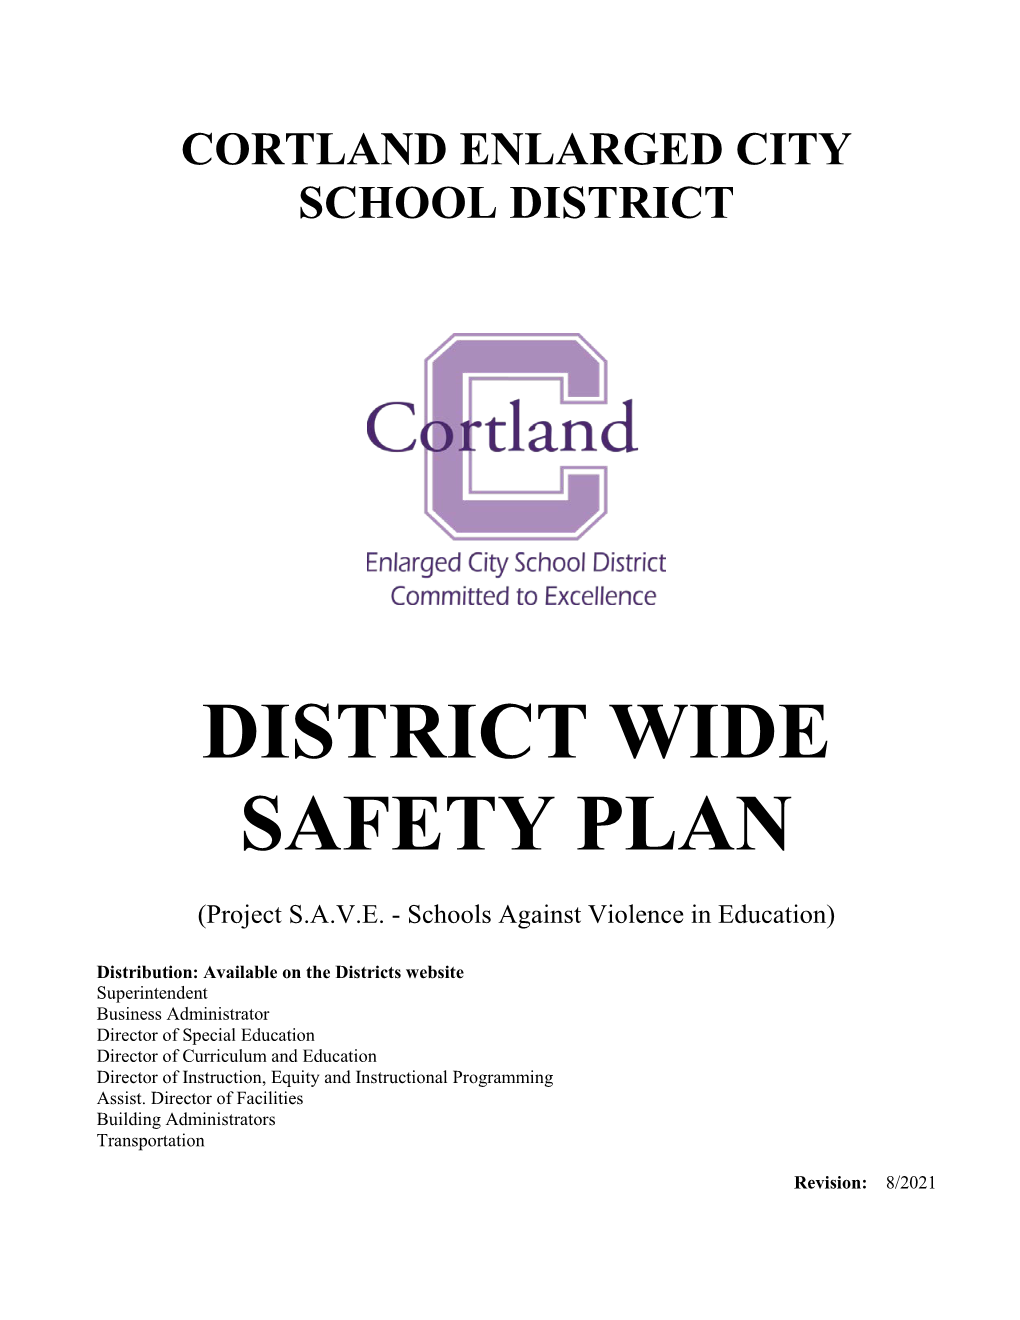 District Wide Safety Plan